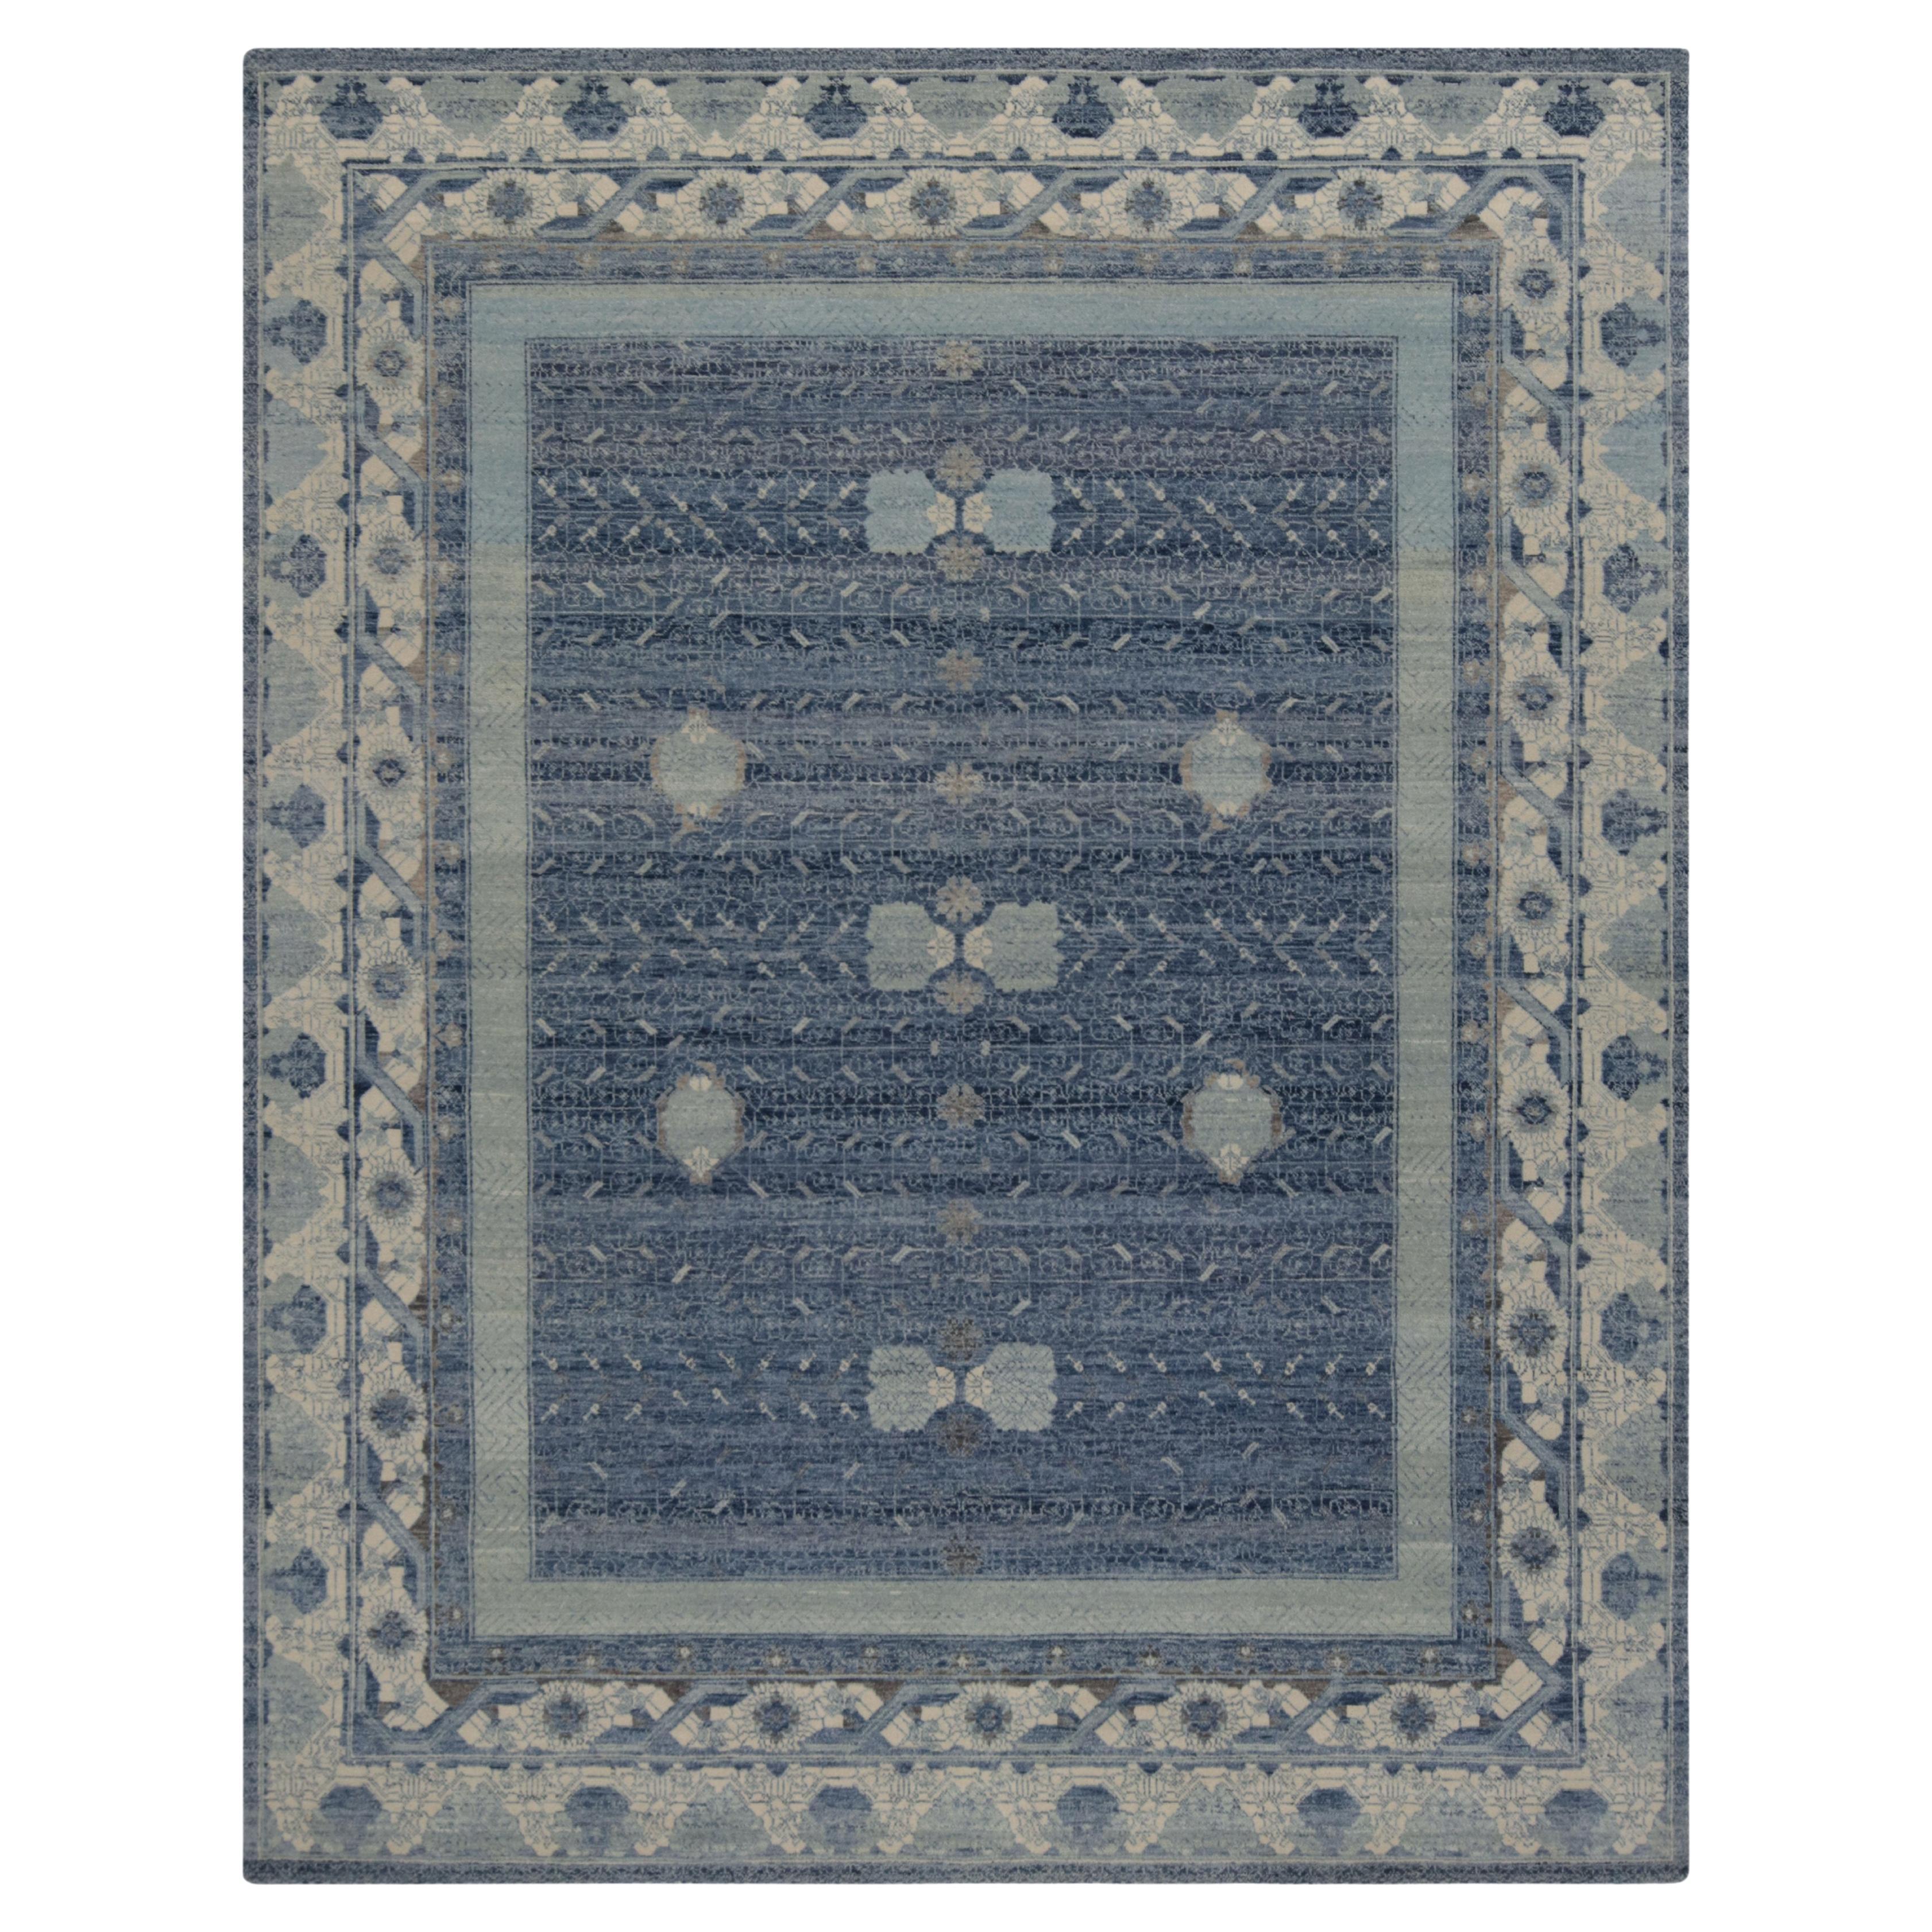 Rug & Kilim’s Khotan Style Rug in Blue with Geometric Patterns